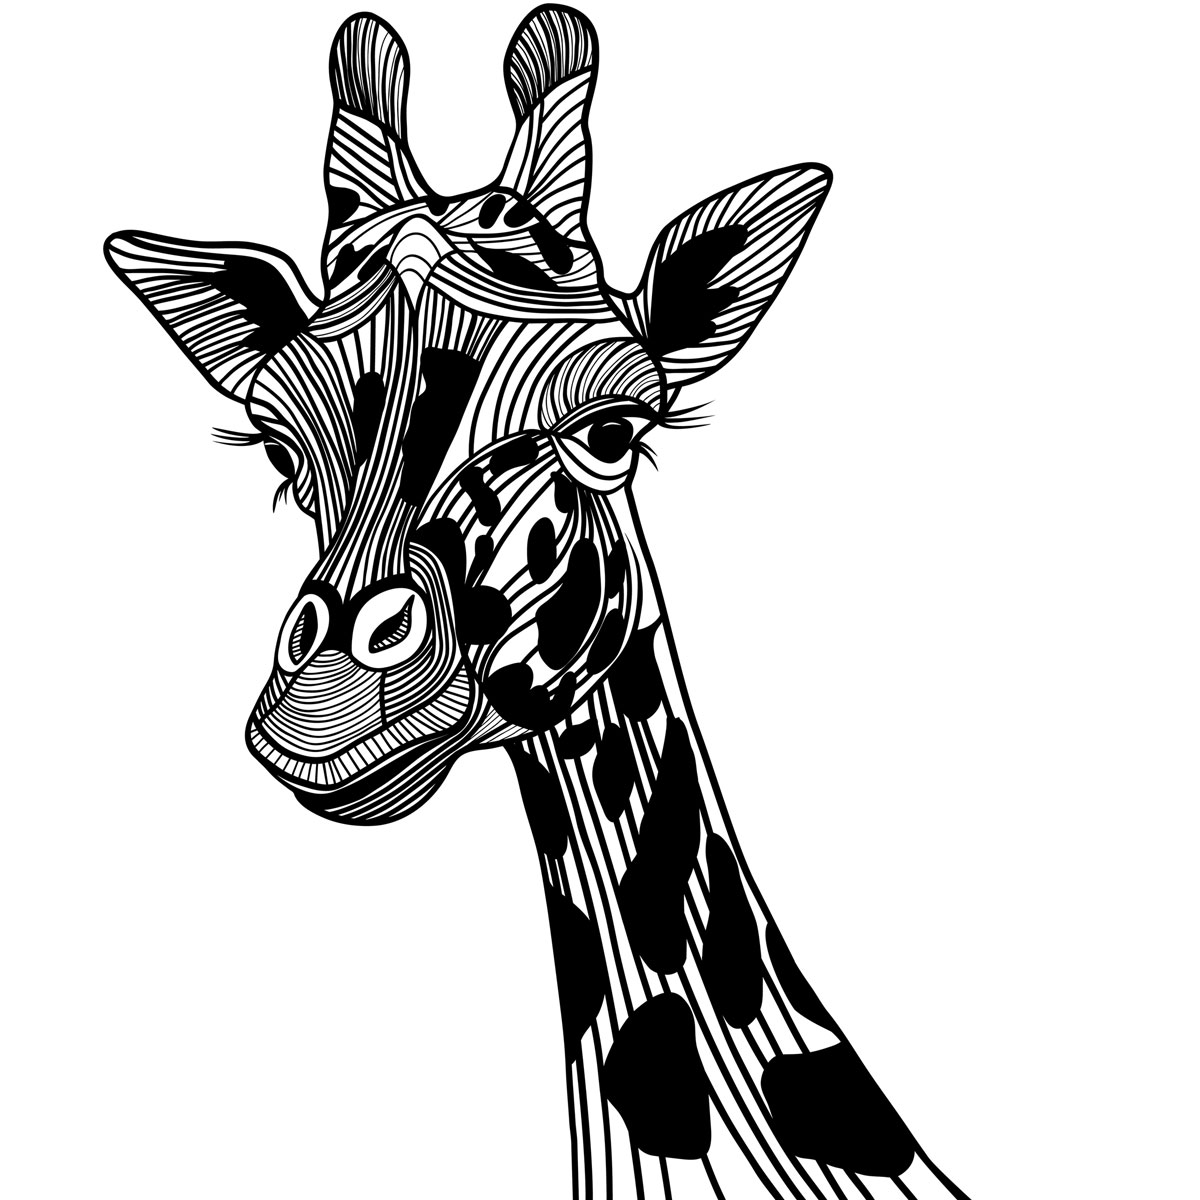 11 Most Famous Giraffe Tattoo Designs